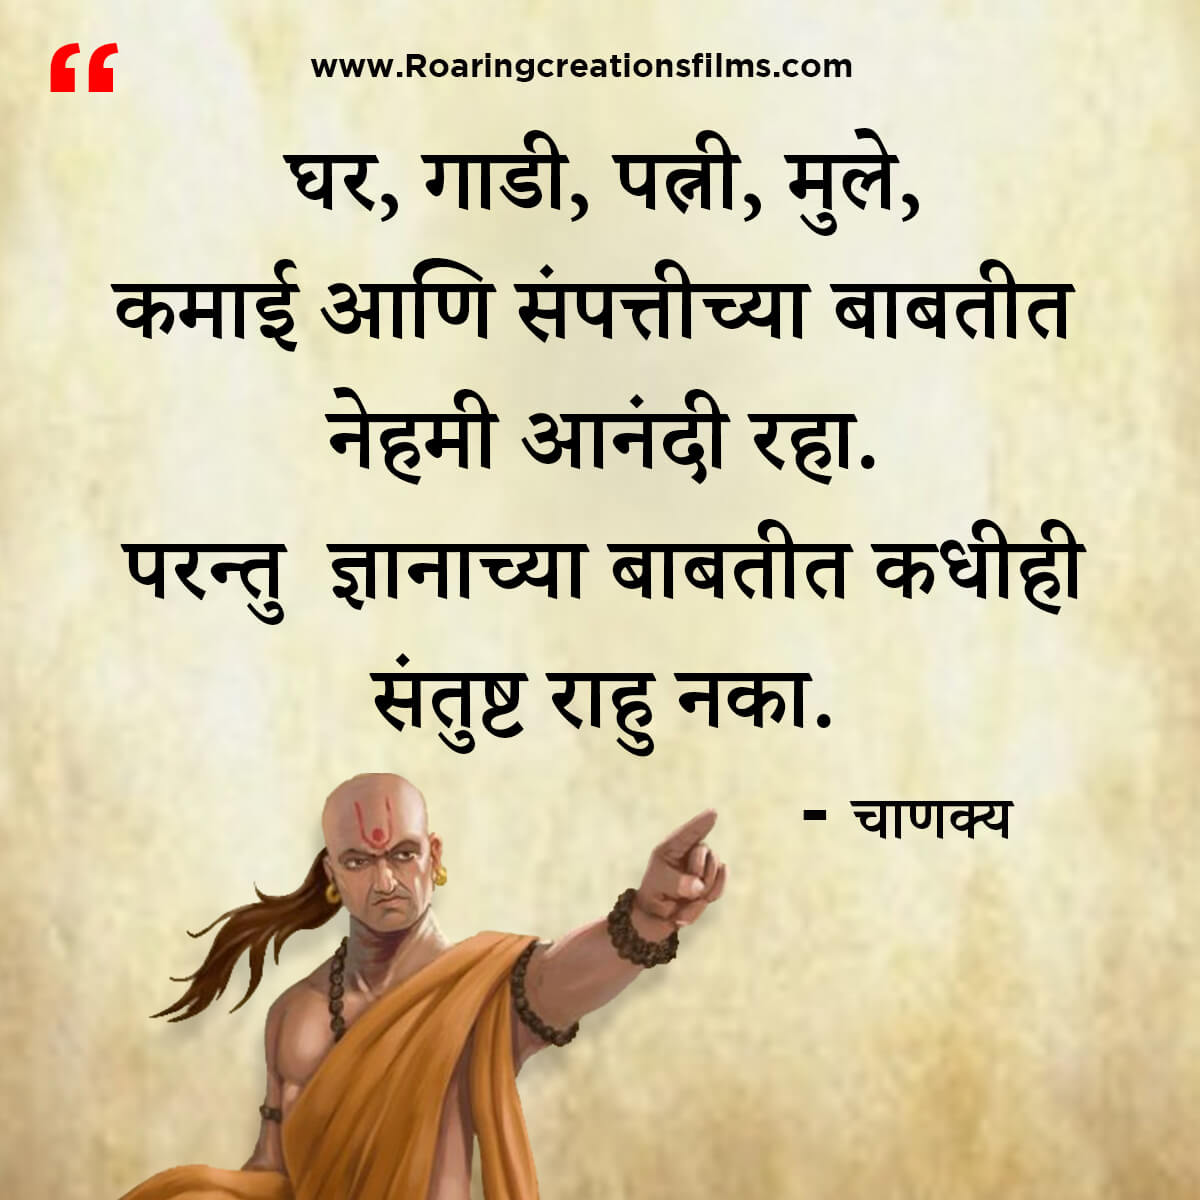 चाणक्य नीति मराठी - Chanakya Niti in Marathi - एकूण चाणक्य धोरण - Chanakya Quotes in Marathi